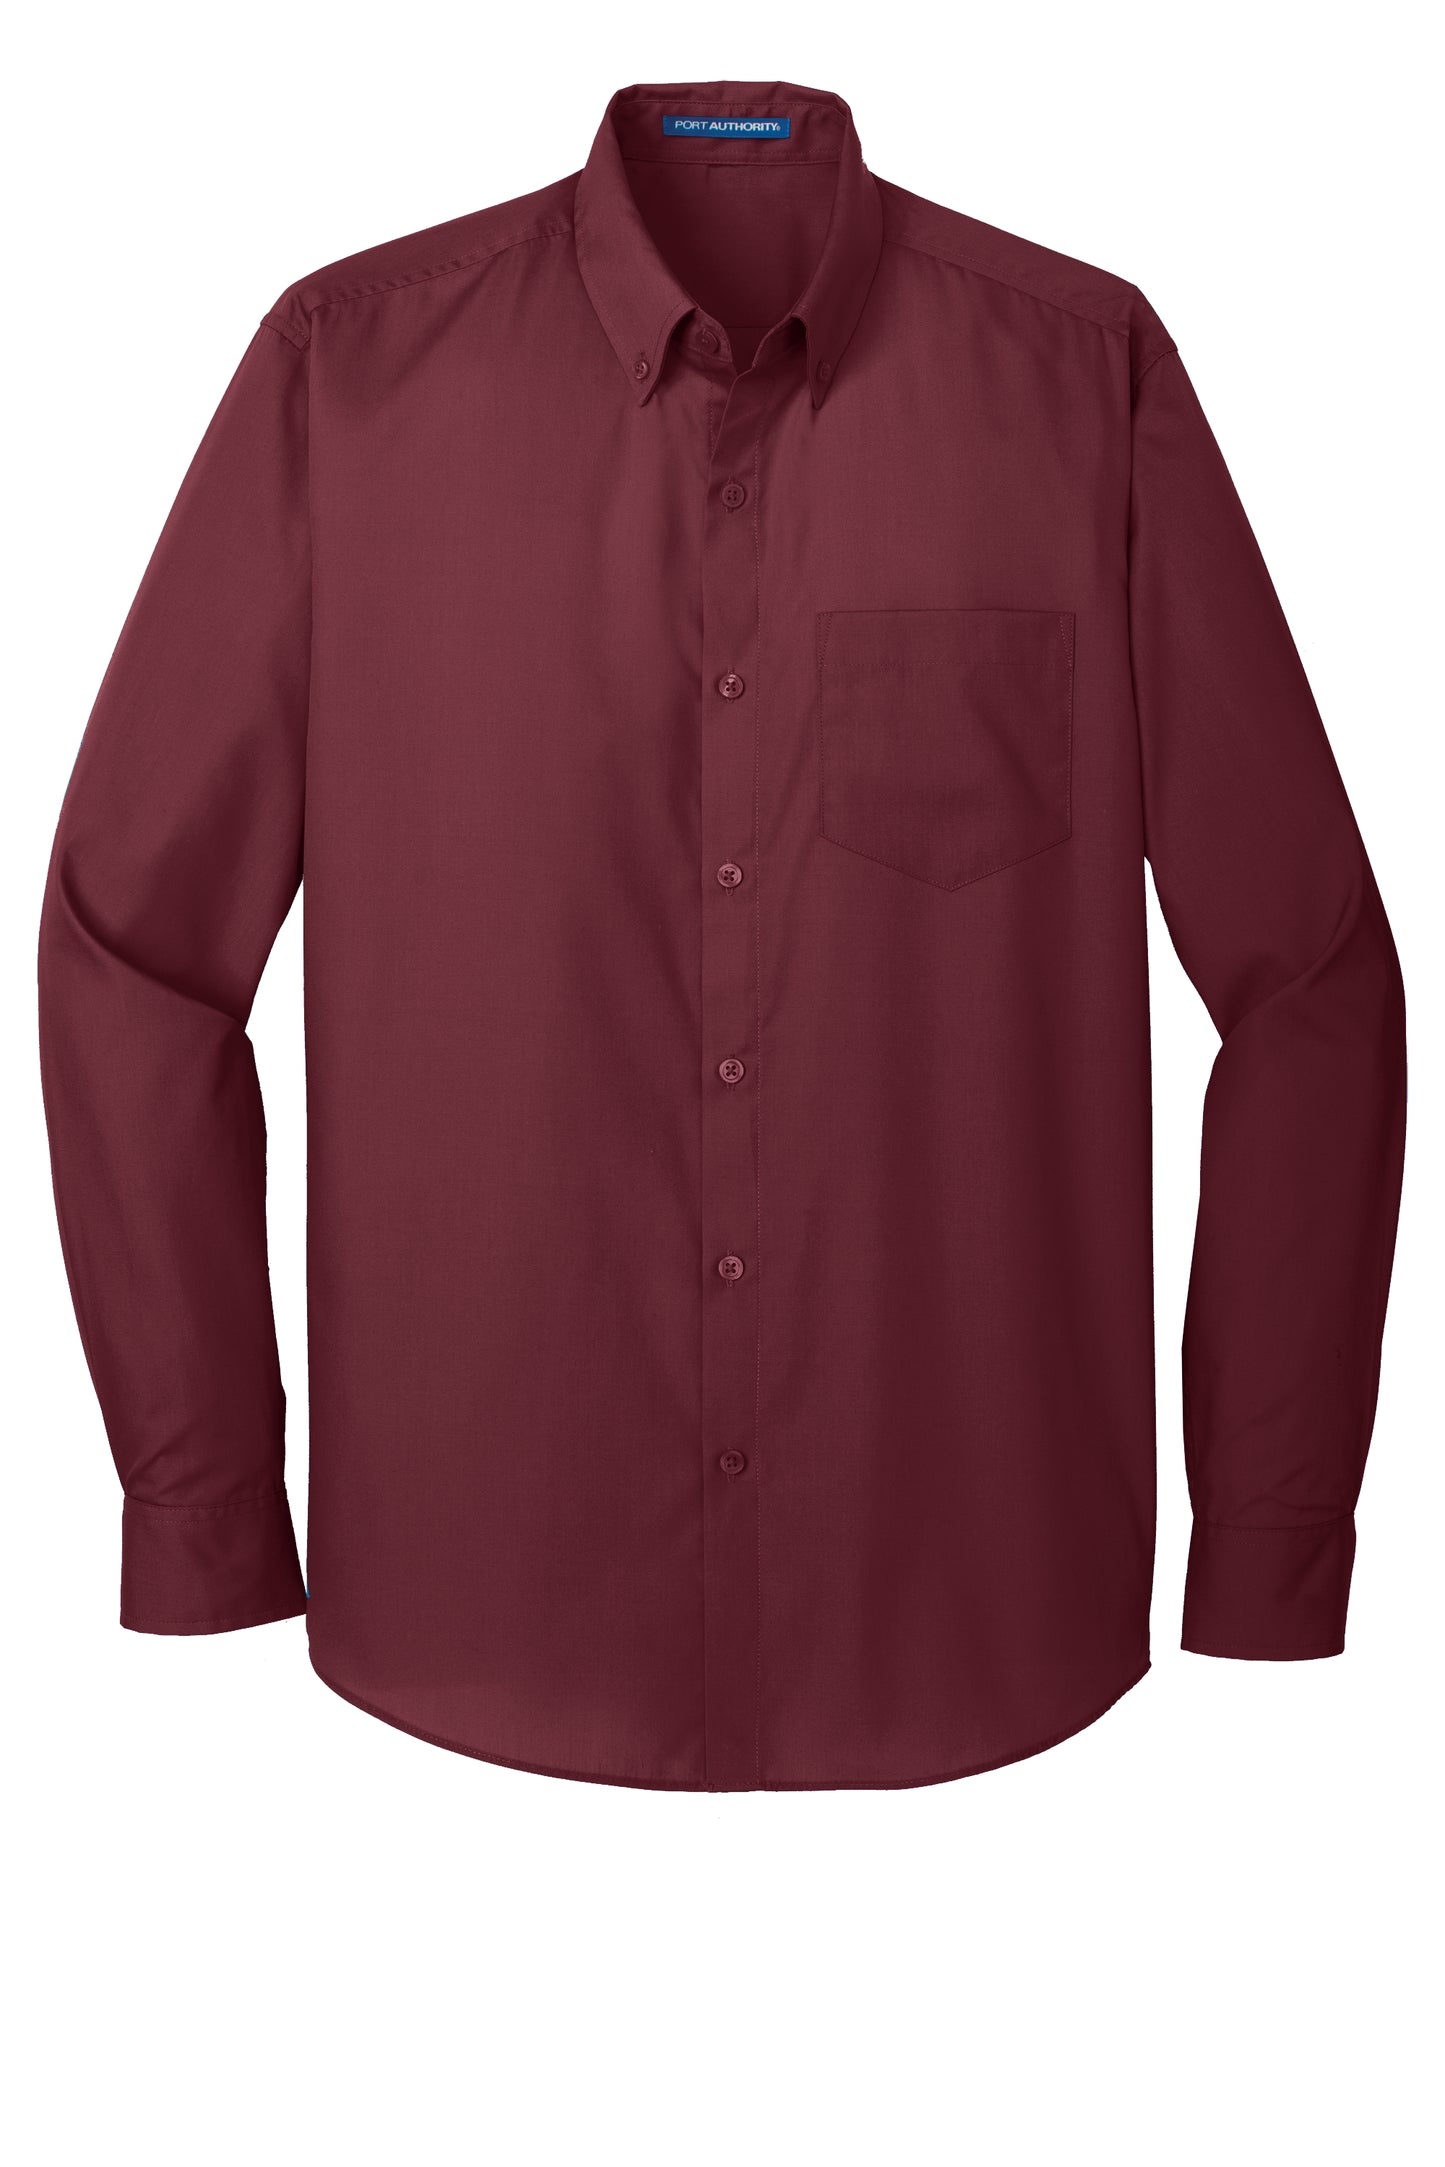 port authority long sleeve carefree poplin shirt burgundy